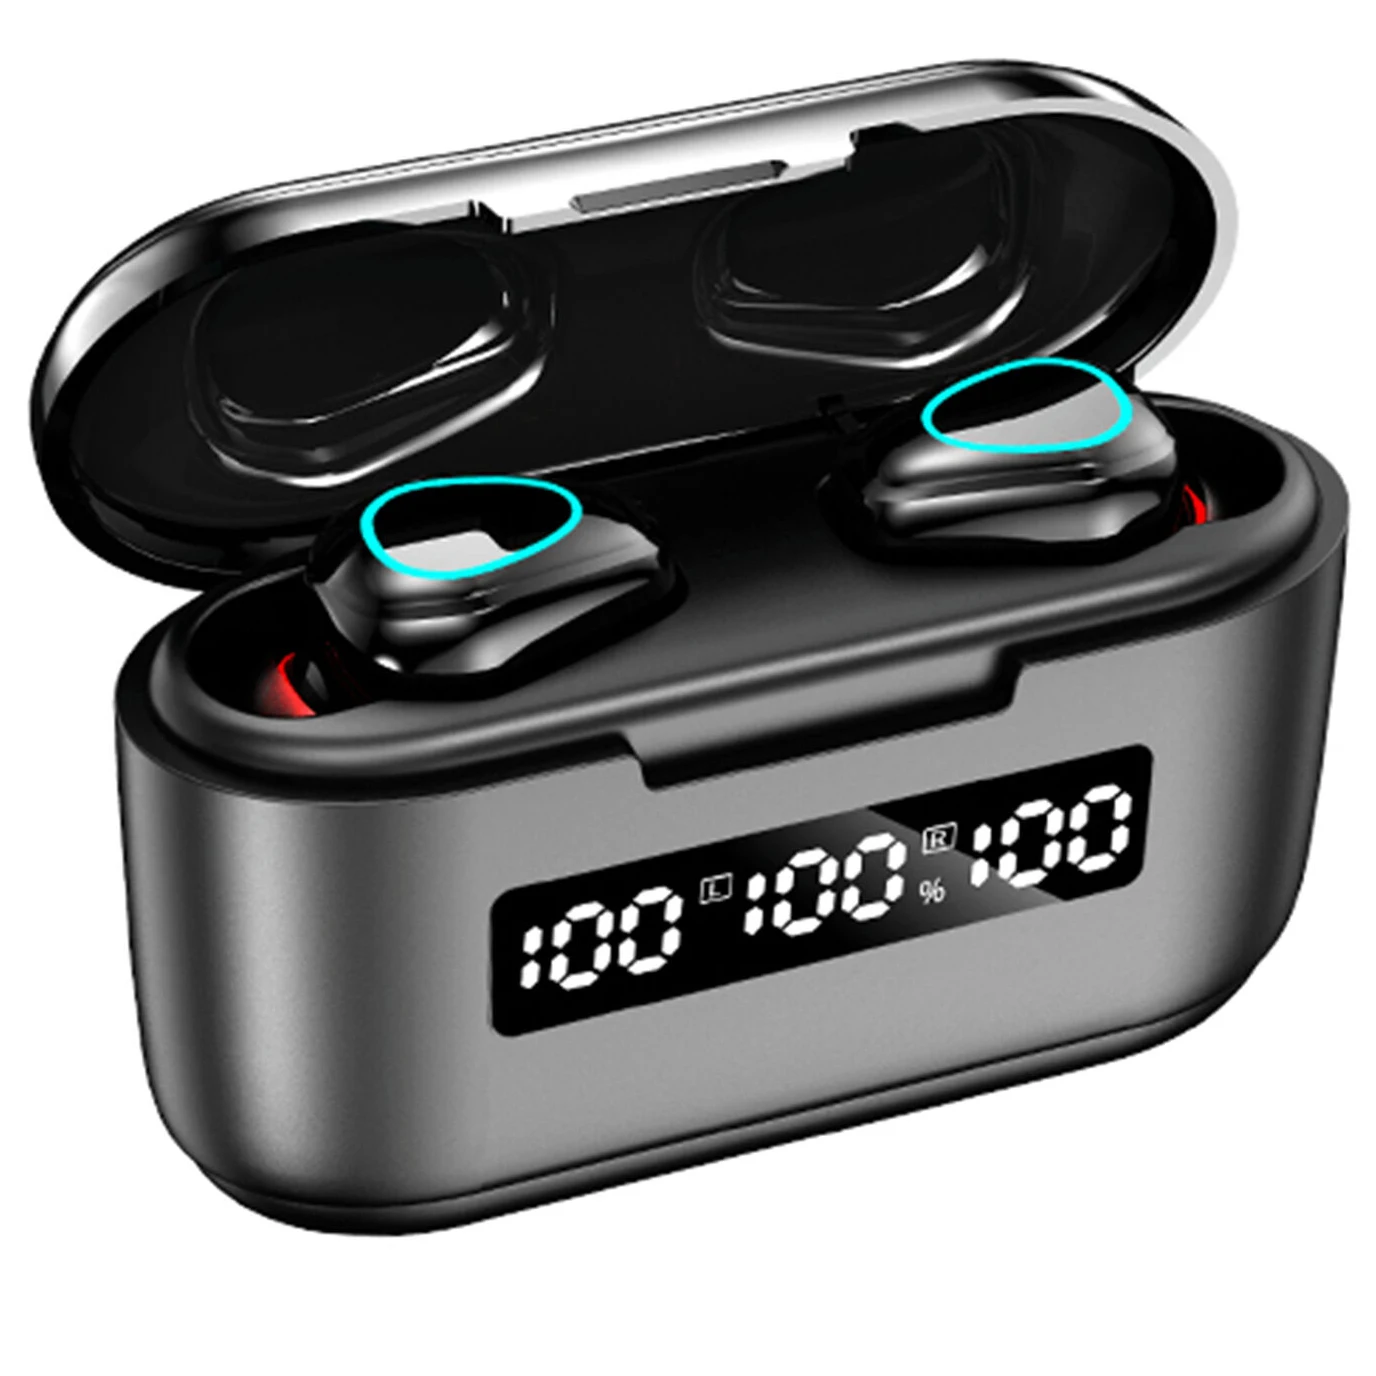 

G40 Waterproof Tws Earphone 5.1 Wireless In Ear Earbuds with 3500mah Power Bank Box 9D Touch Control Headphone